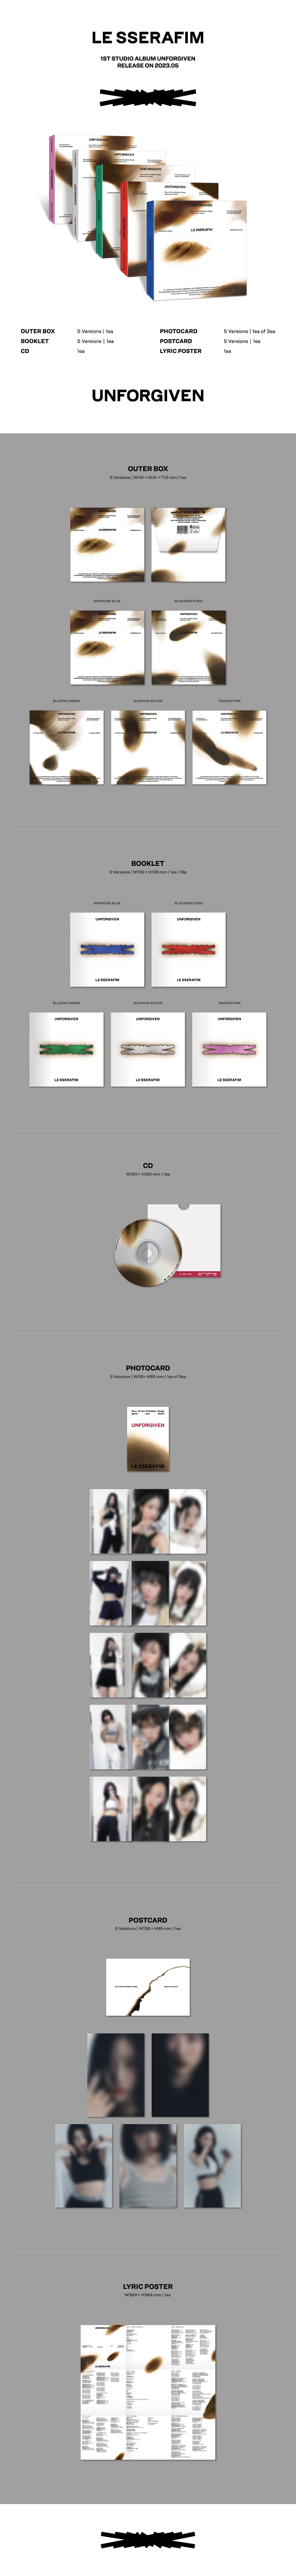 LE SSERAFIM 1st Studio Album UNFORGIVEN (COMPACT Version)